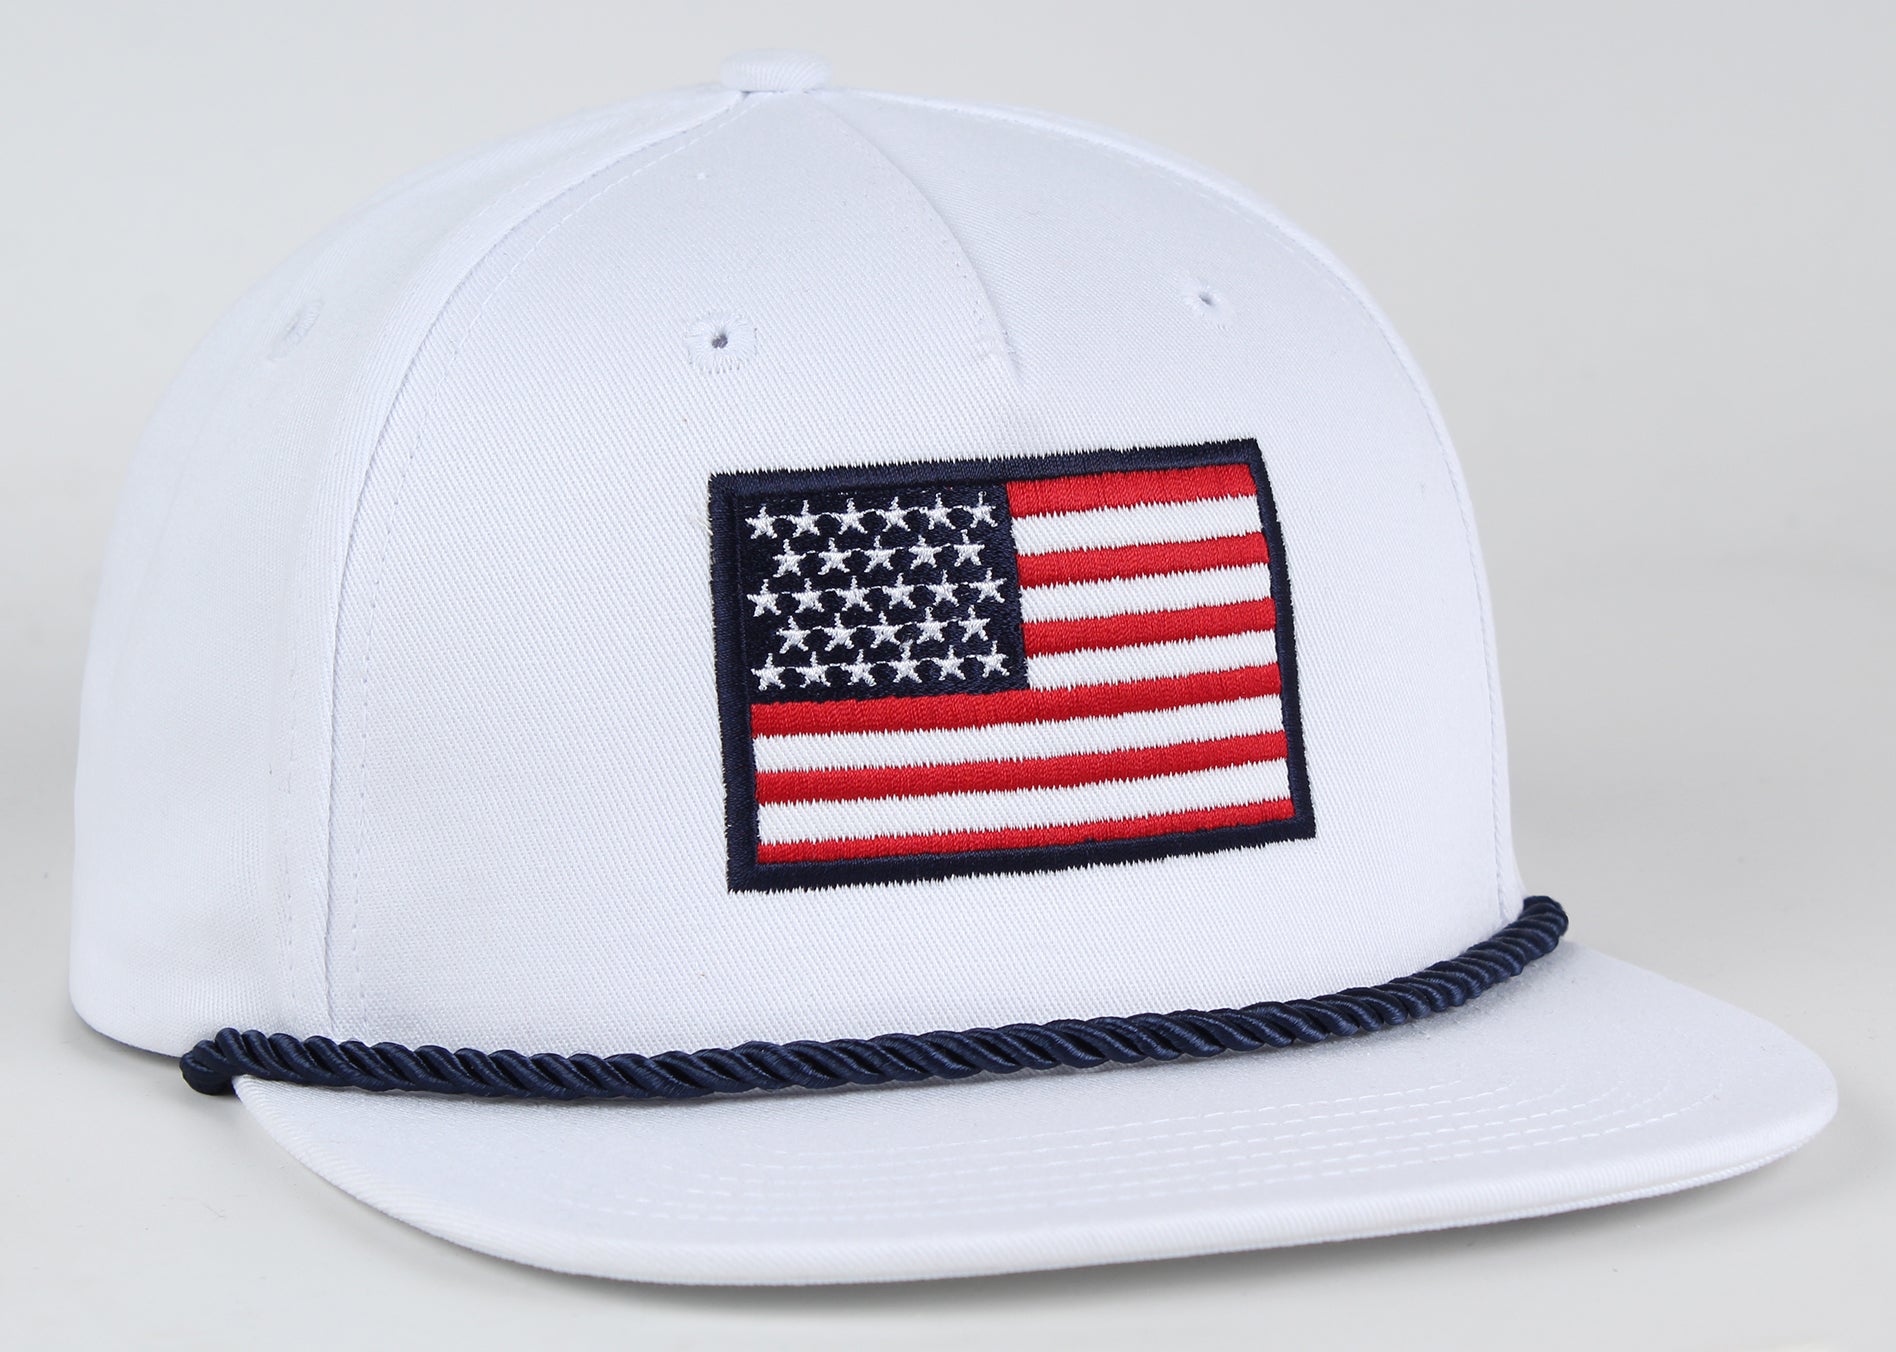 American Flag rope hat -